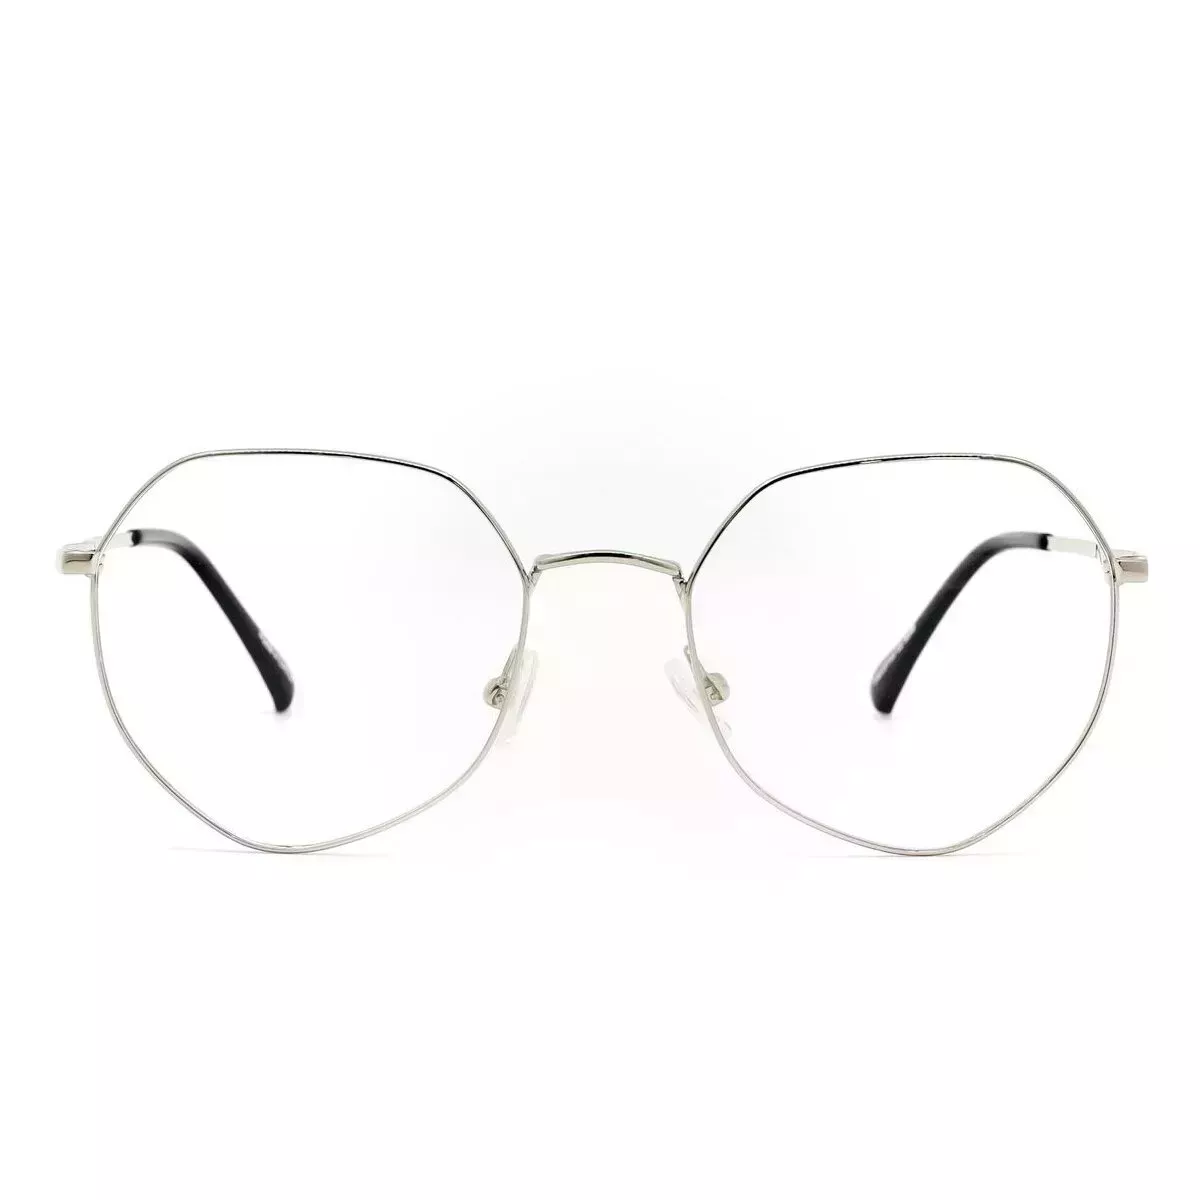 Sasamat glasses on white background 